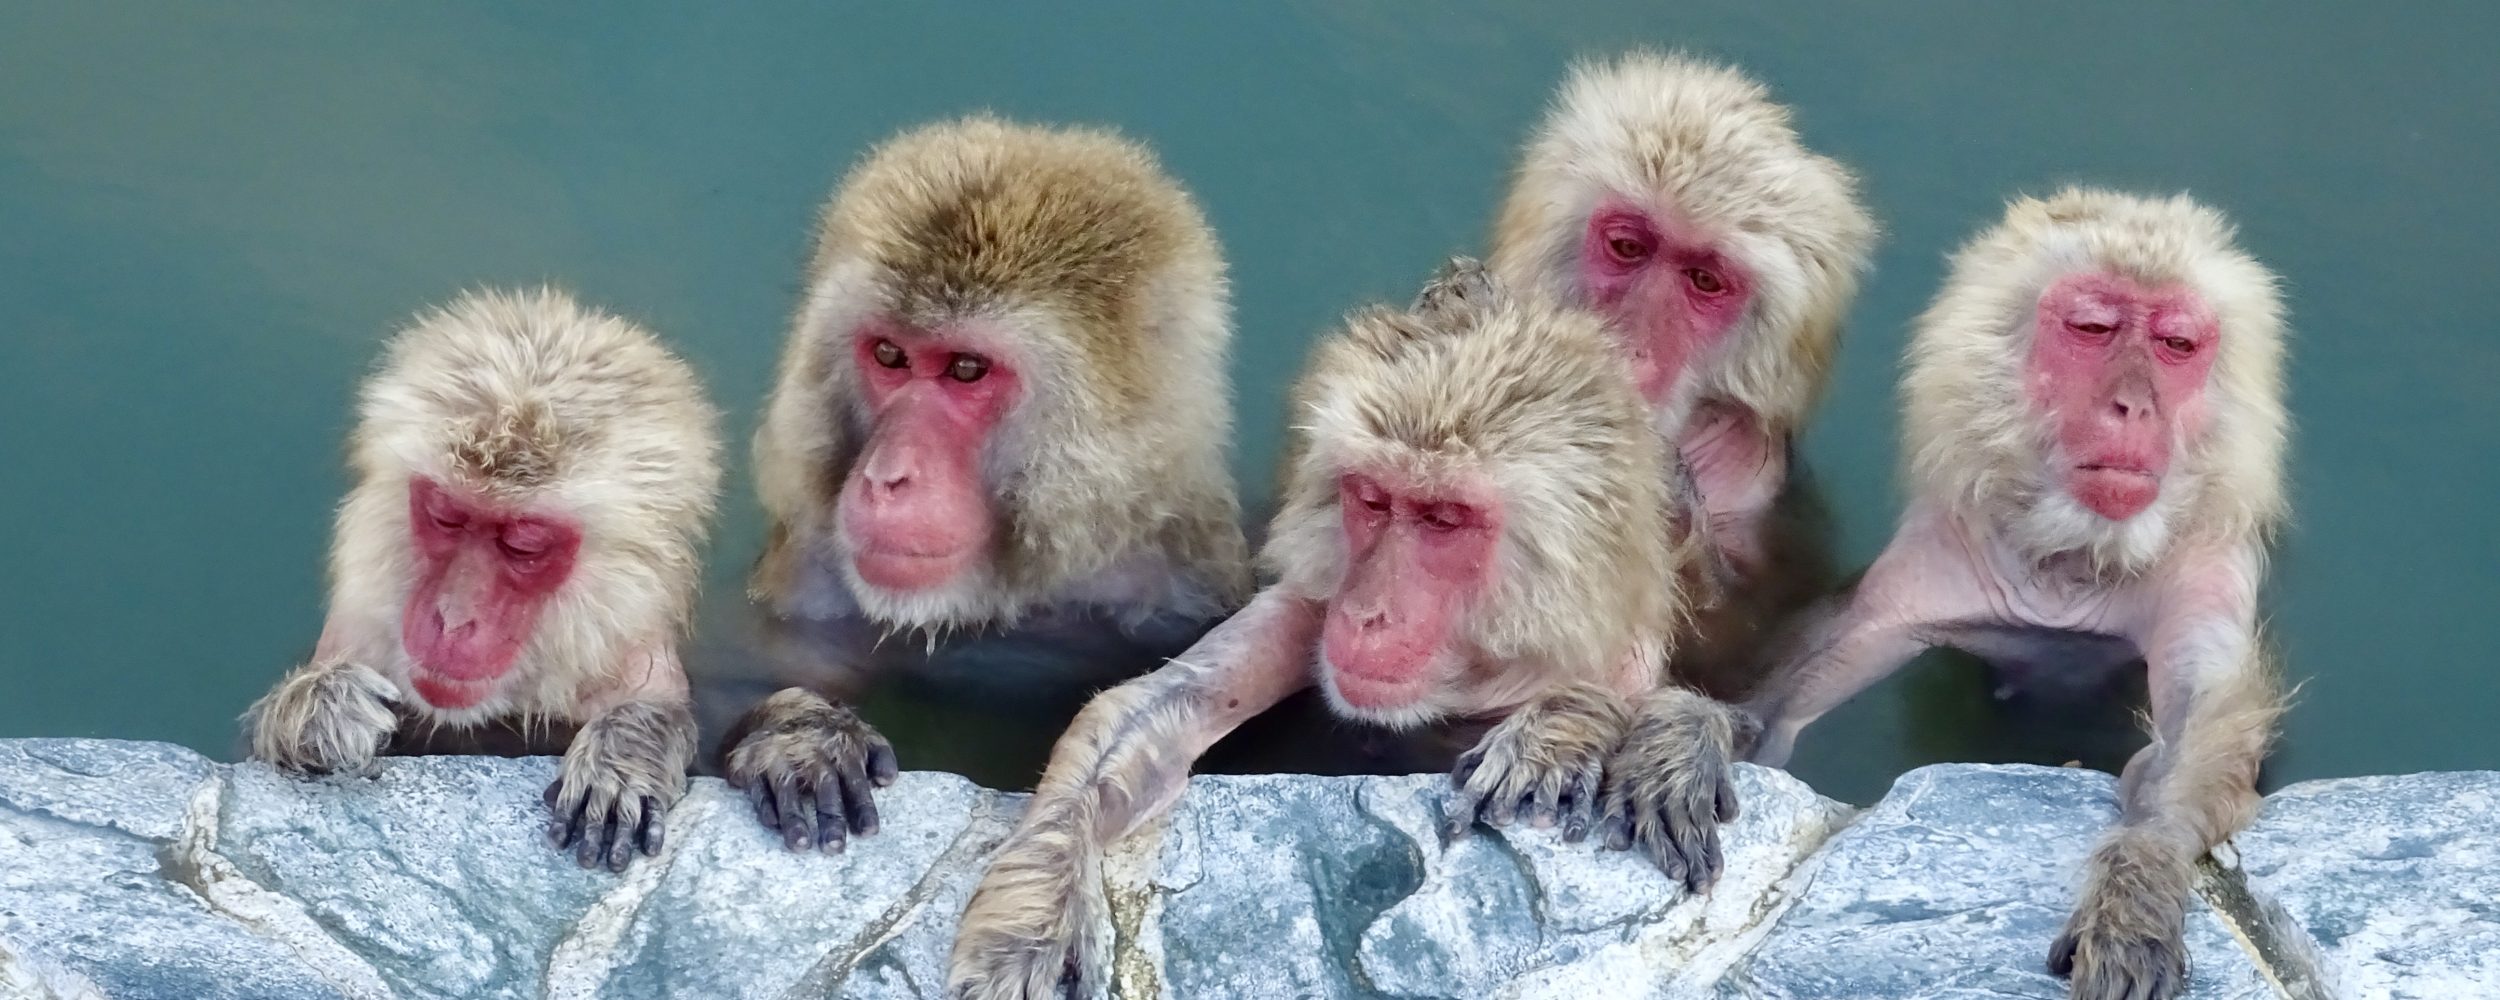 Snježni majmuni u Hakodateu, Japan